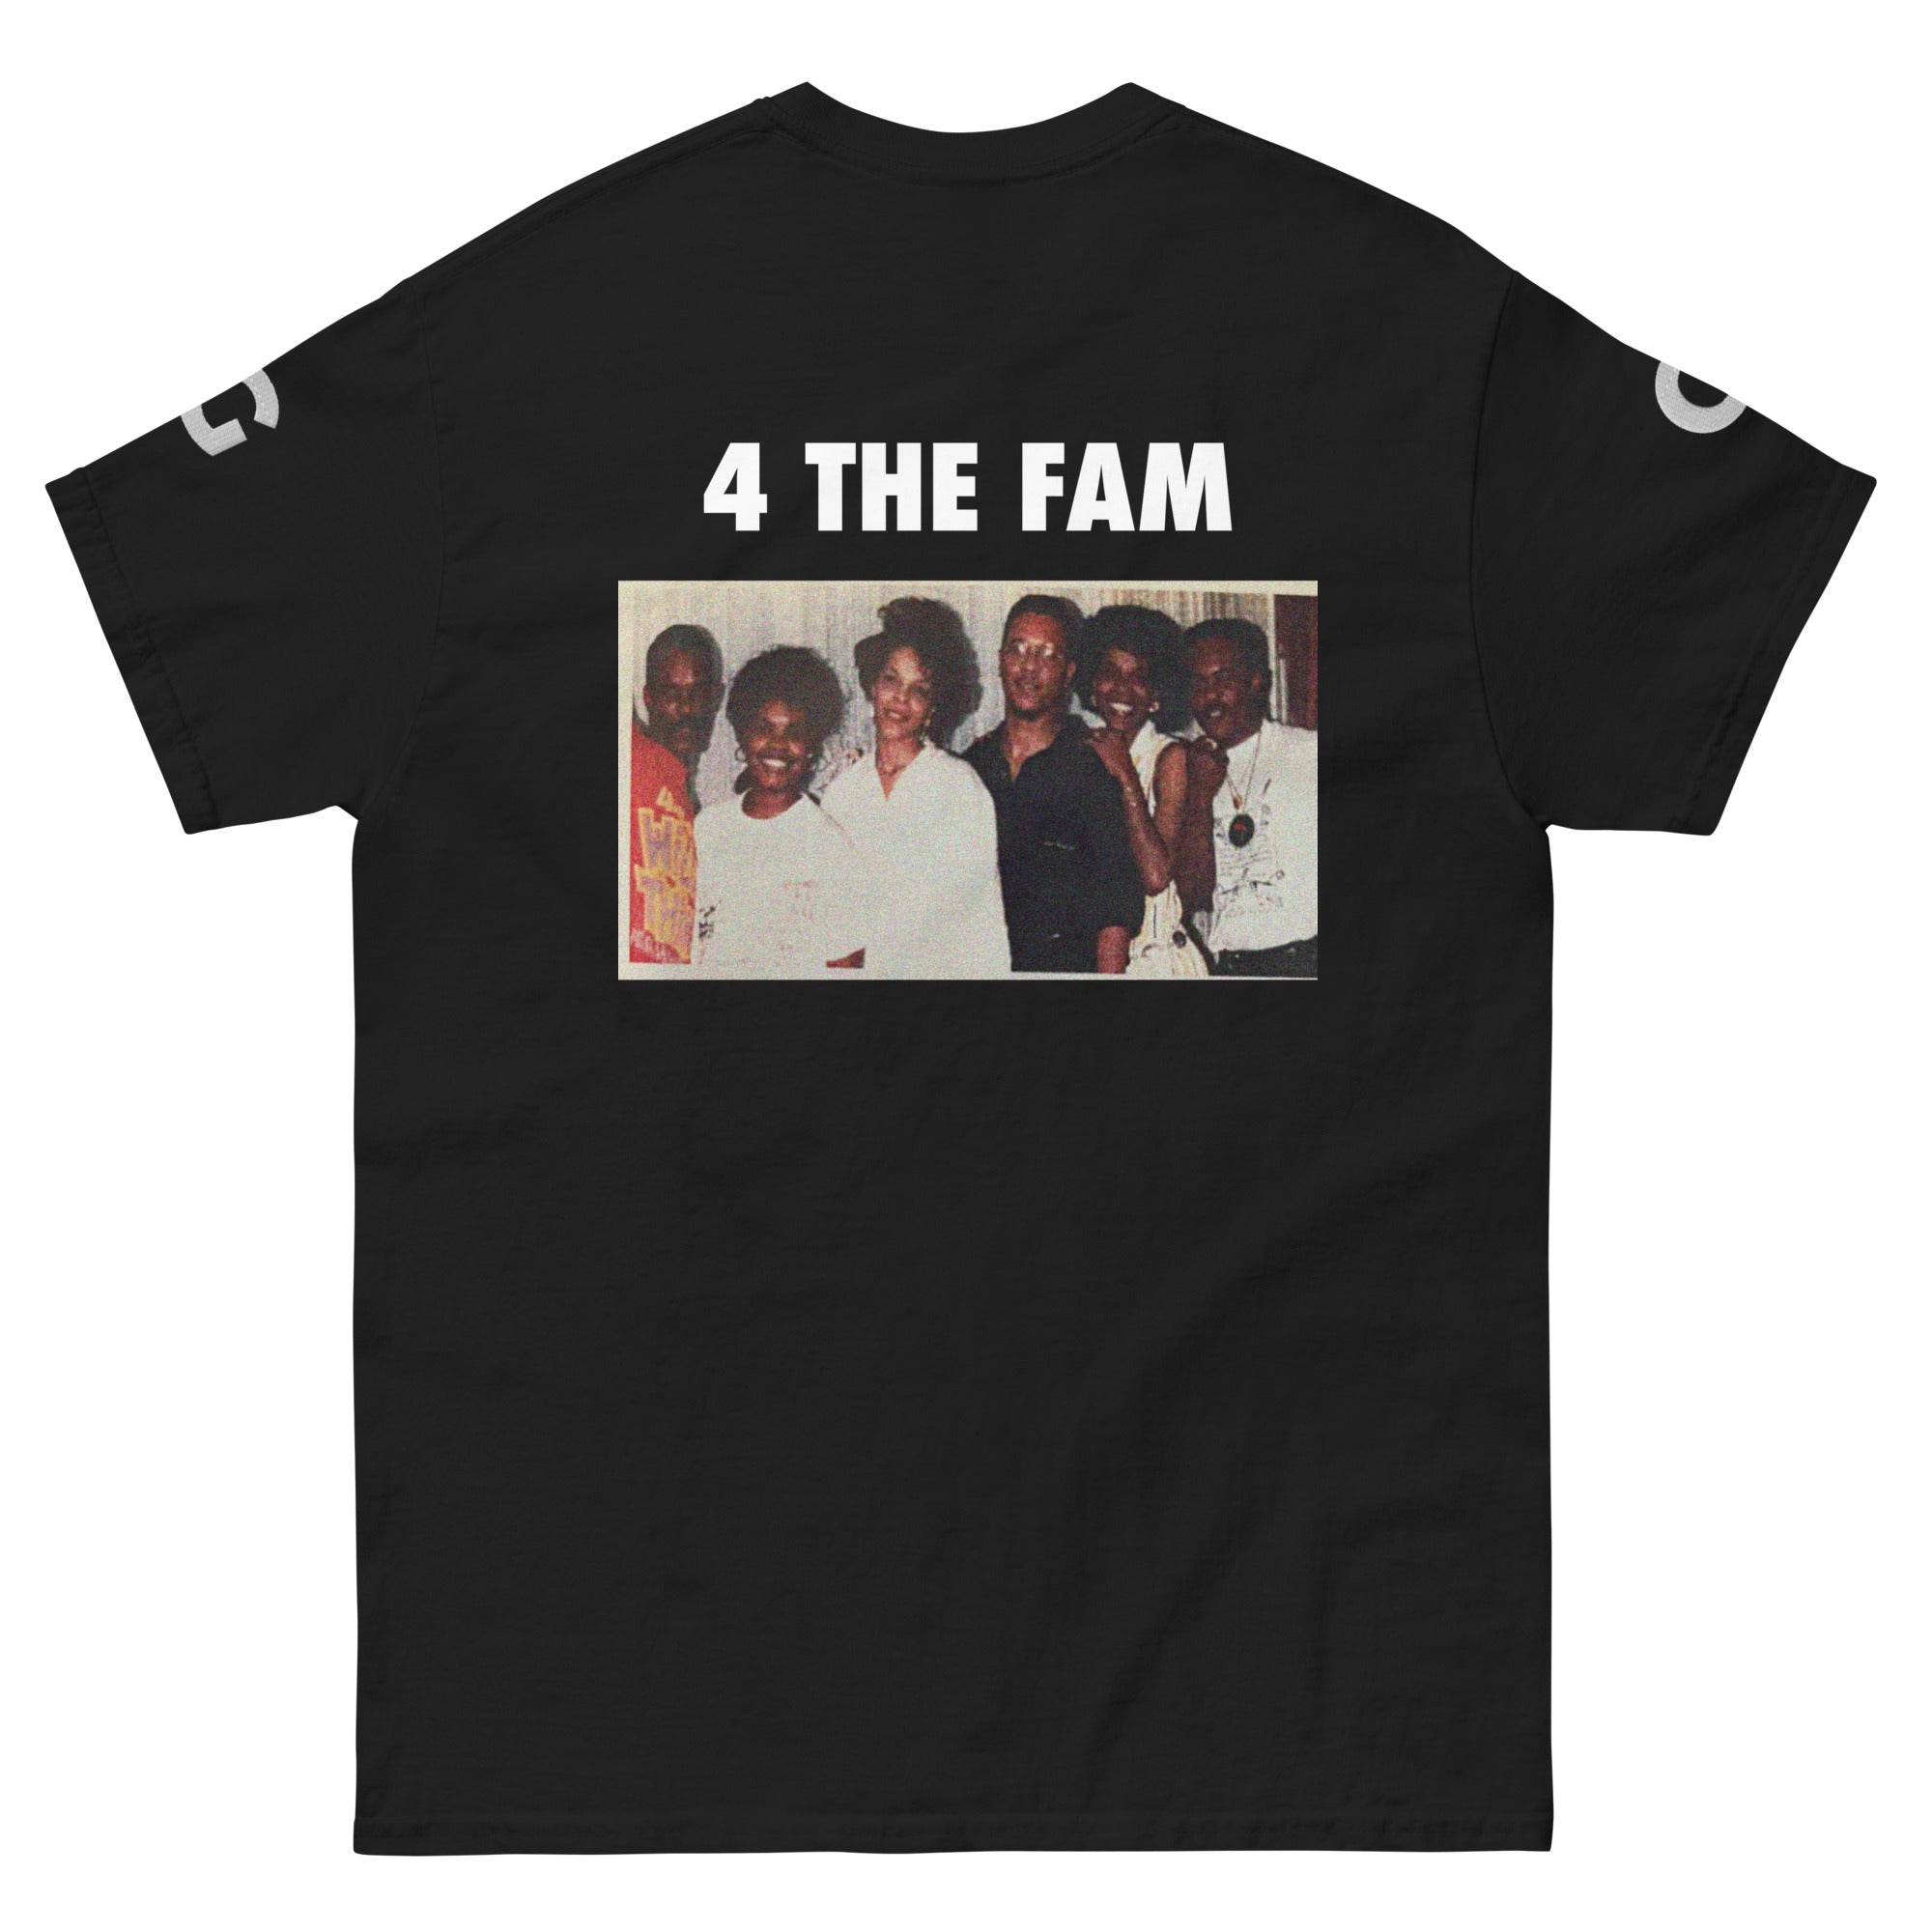 Graceful x 4 The Fam T-Shirt (Black)